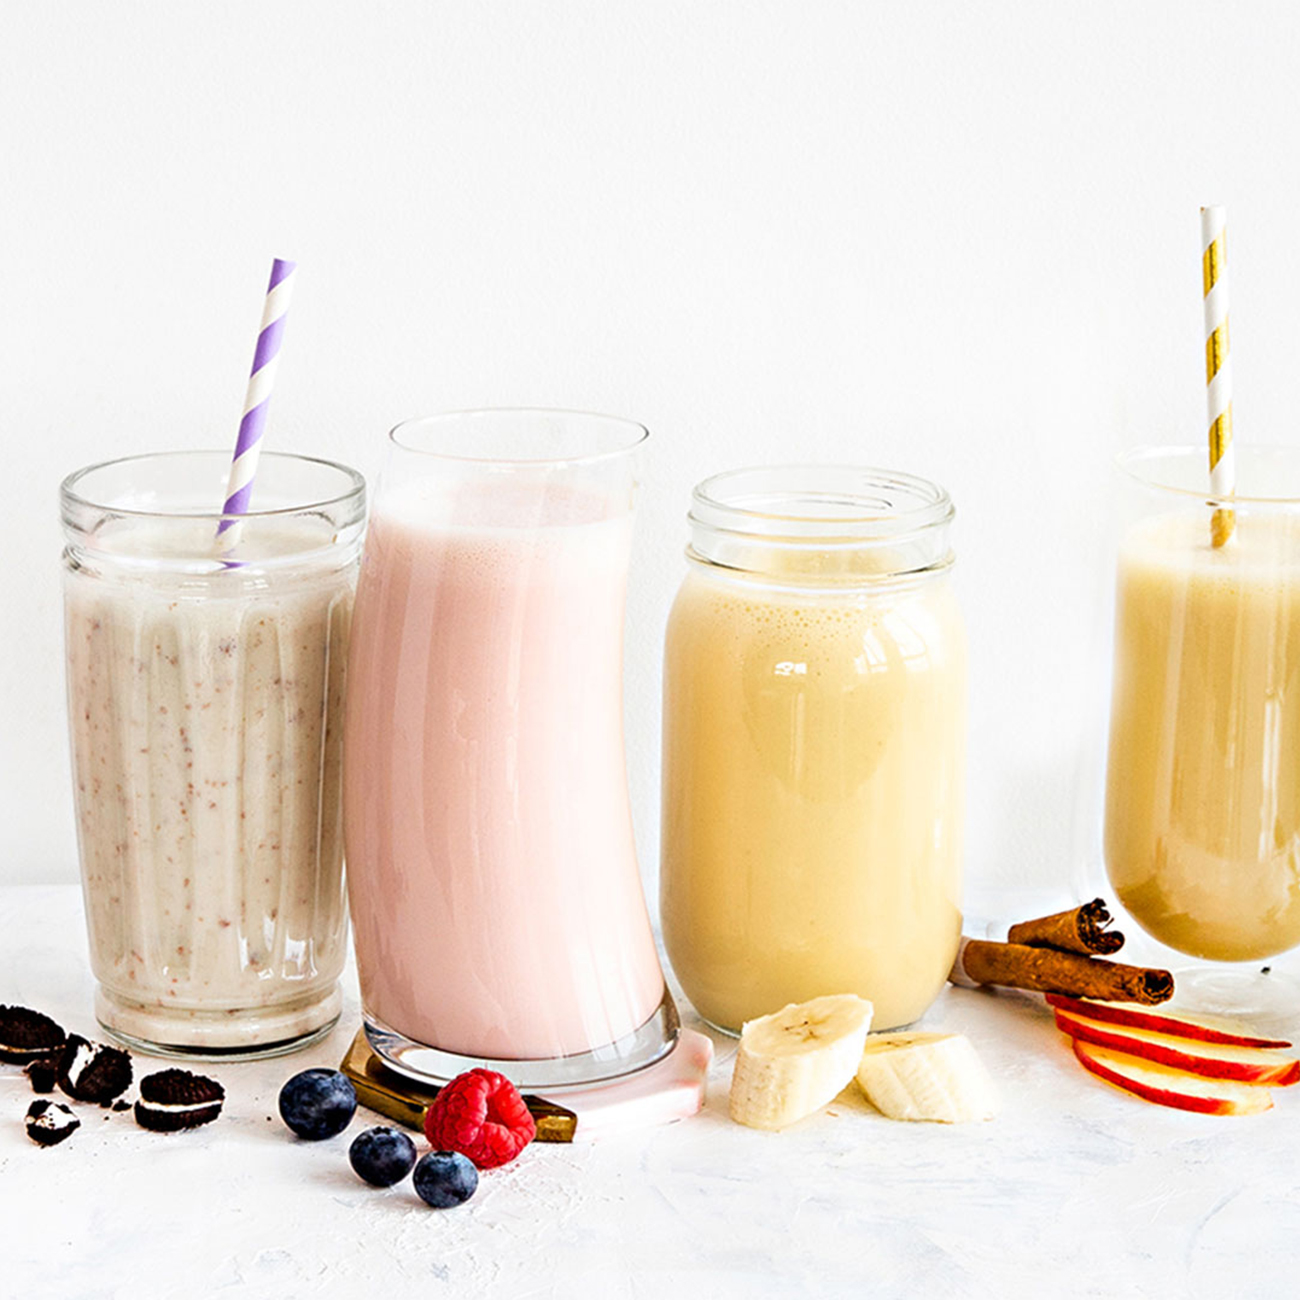 2x strawberry shake, 2x  chocolete shake, 4x shakamate, 2x fiber powder, 2x multivitamin, 1 probiotic. 